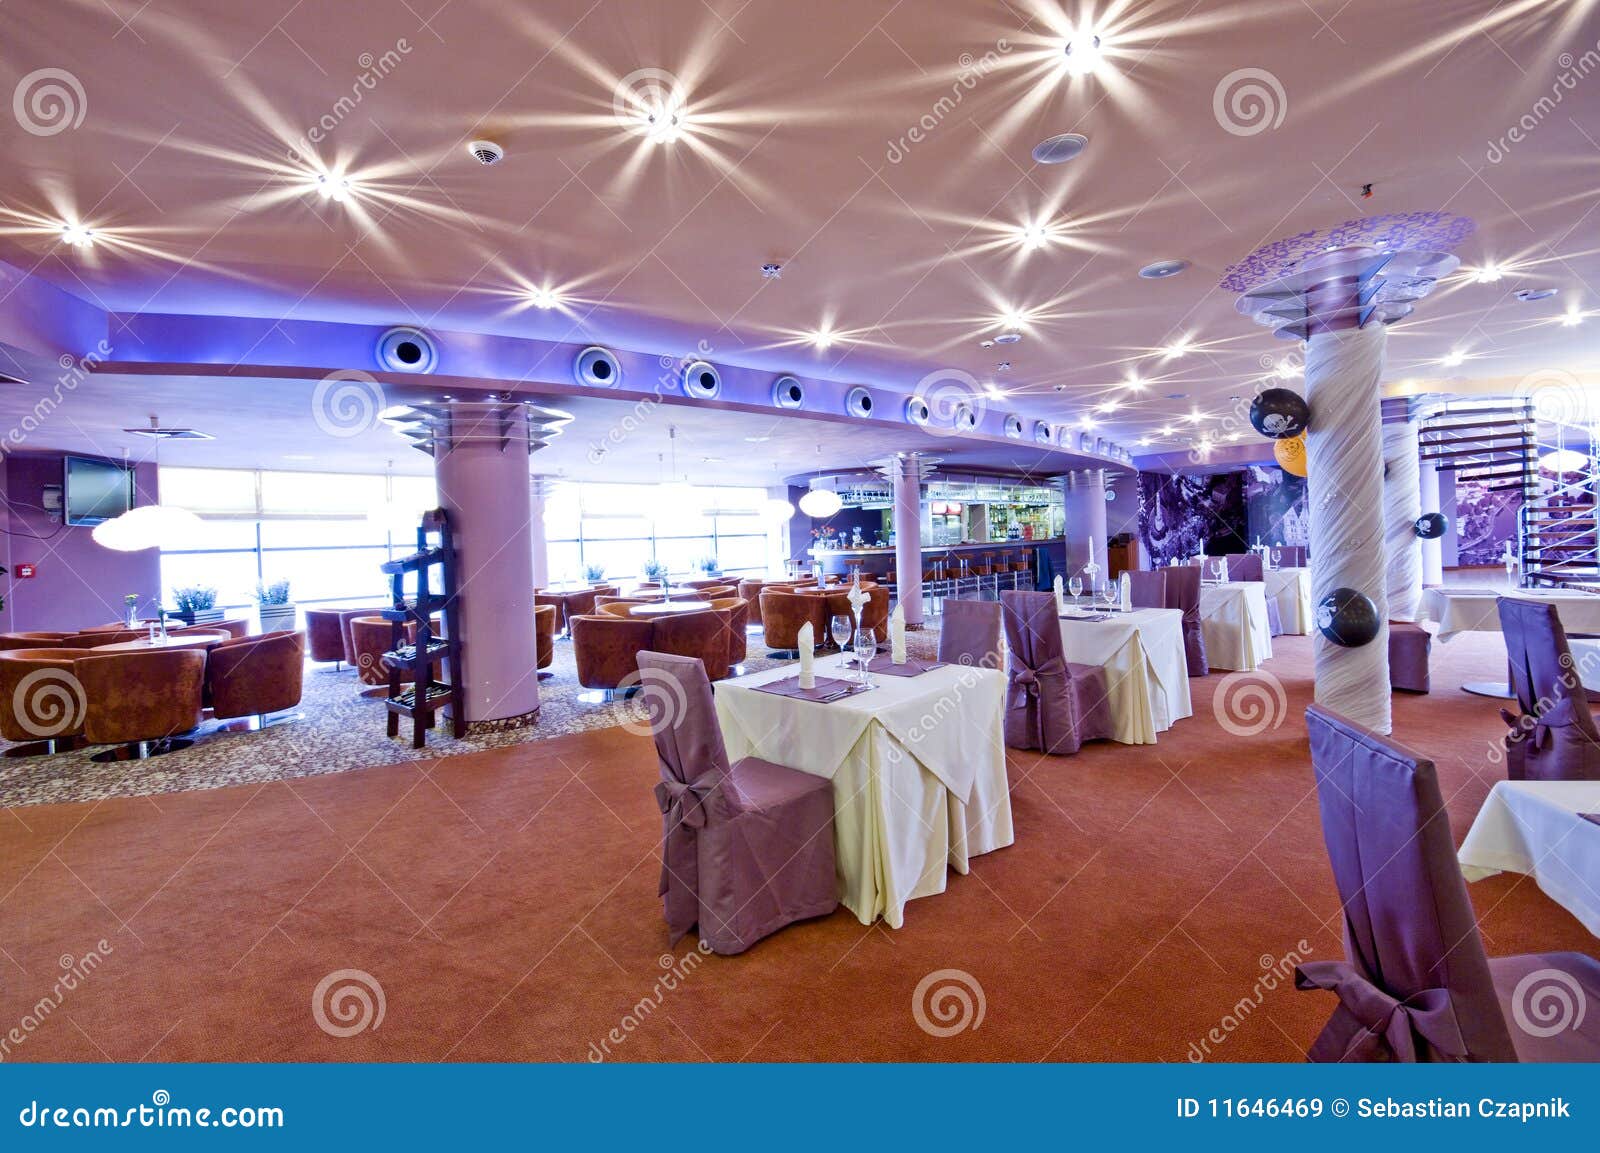 Lighted Restaurant Interior Stock Image Image Of Interior